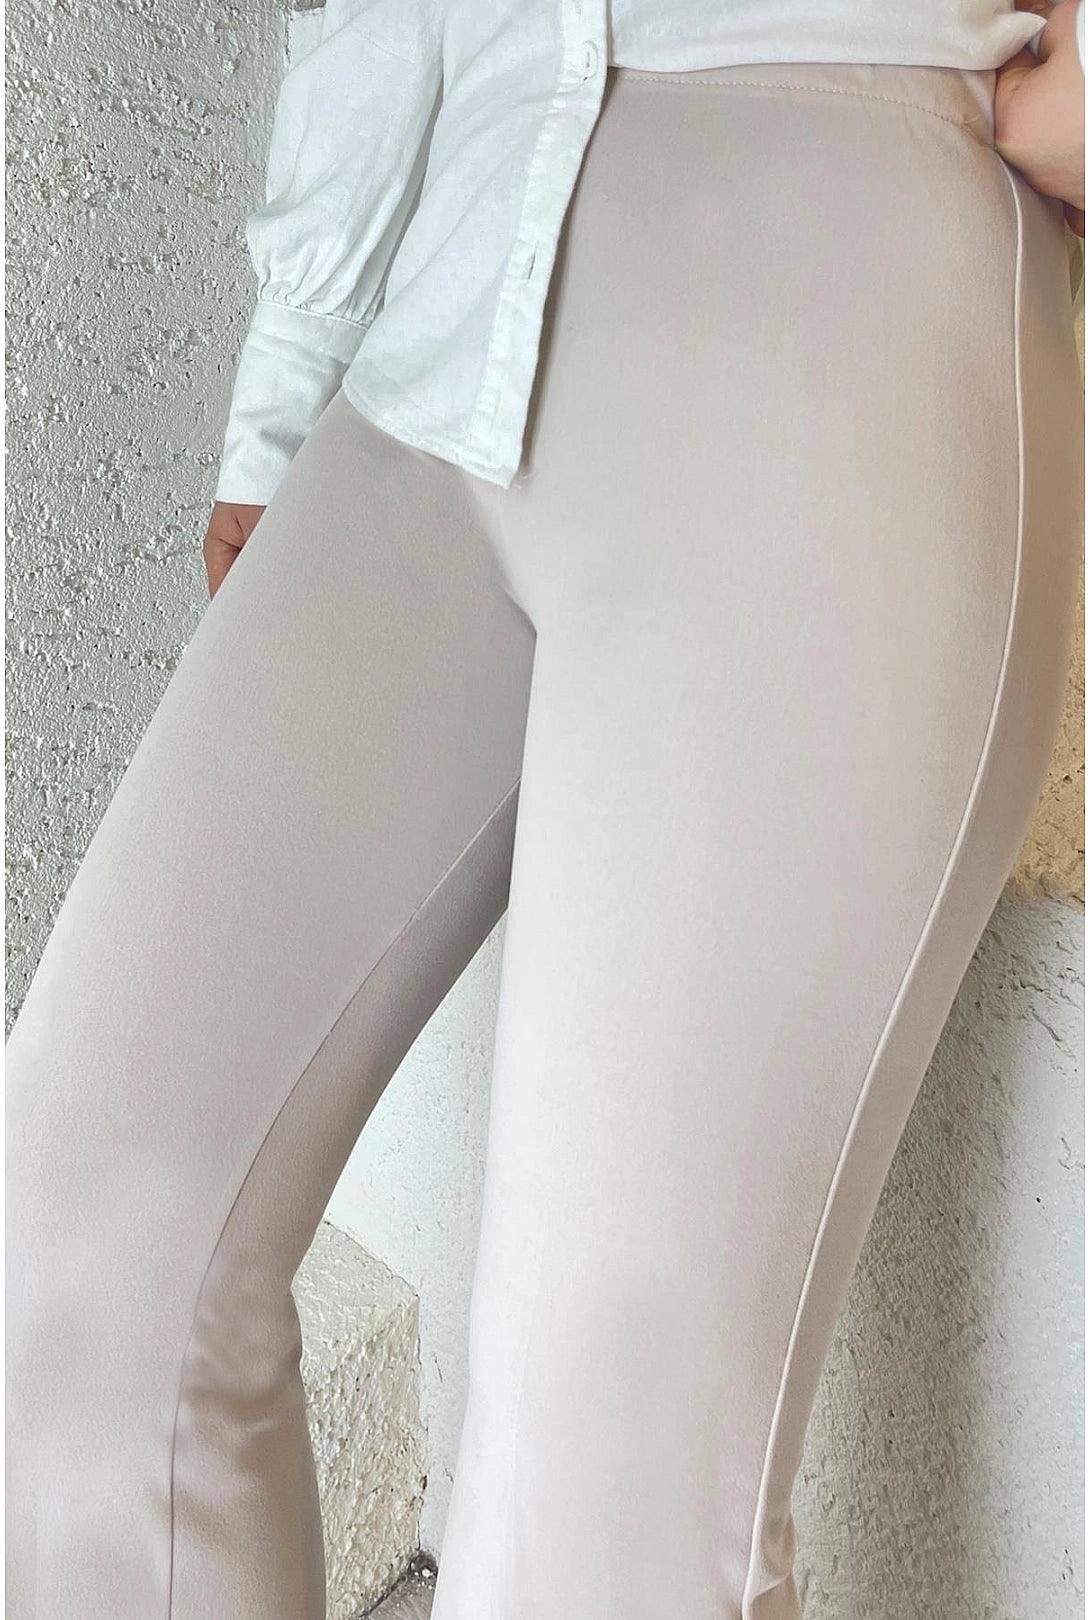 Flare Dress Pants for Women - Stone Grey